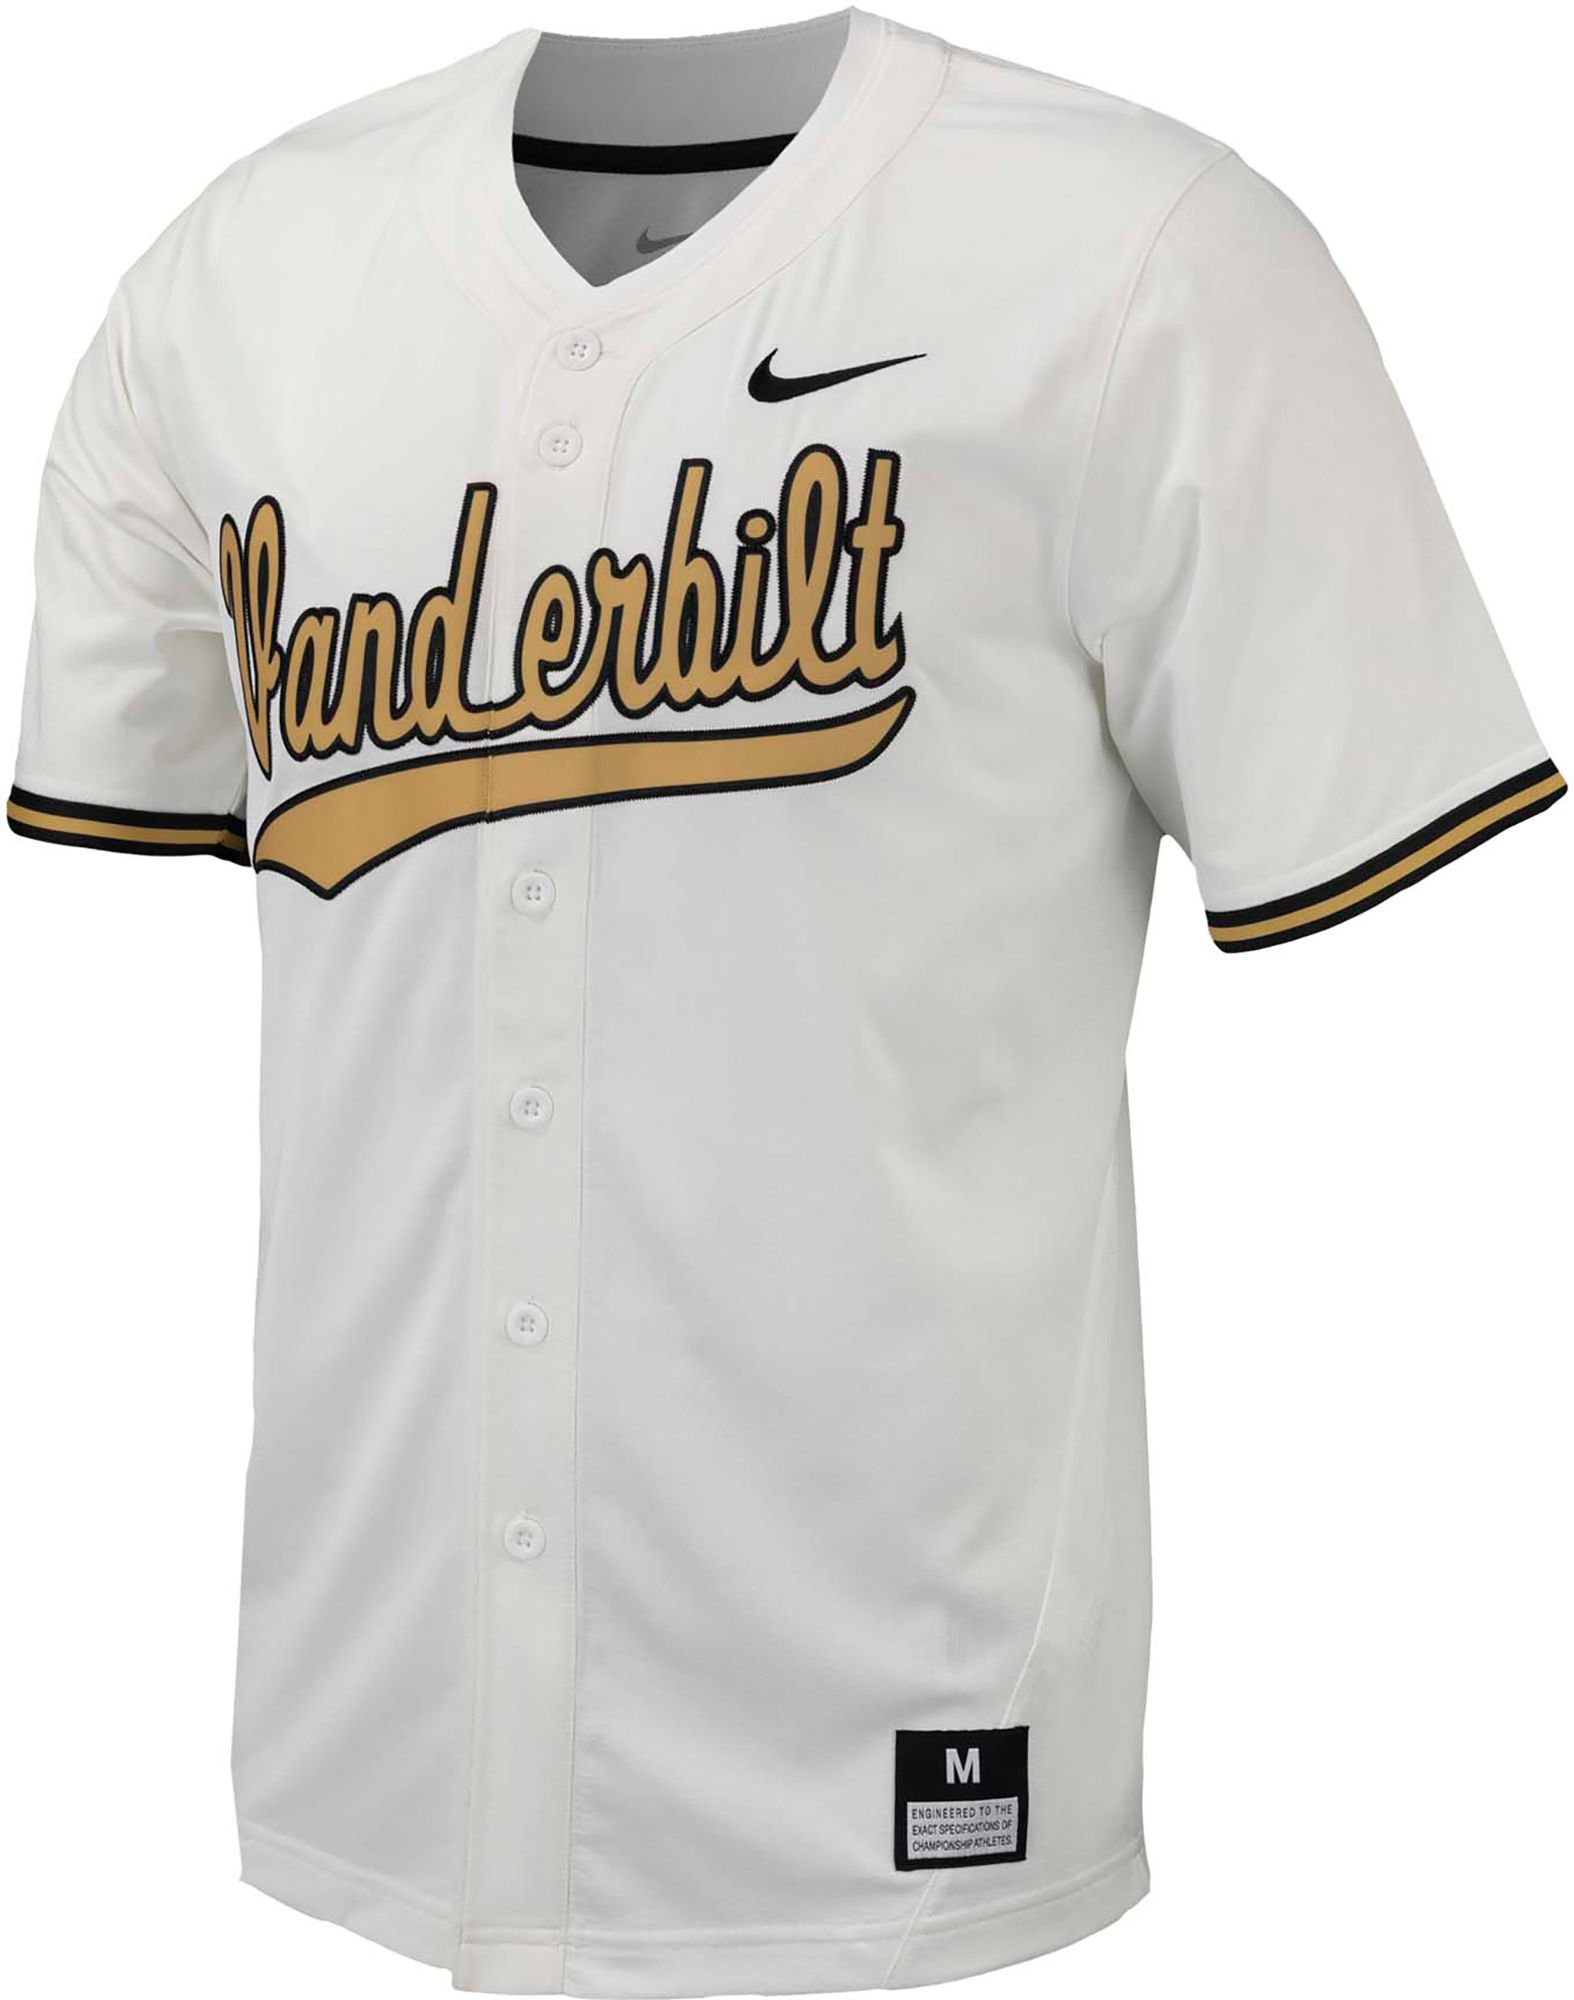 Nike Men's Vanderbilt Commodores Full Button Replica Baseball Jersey